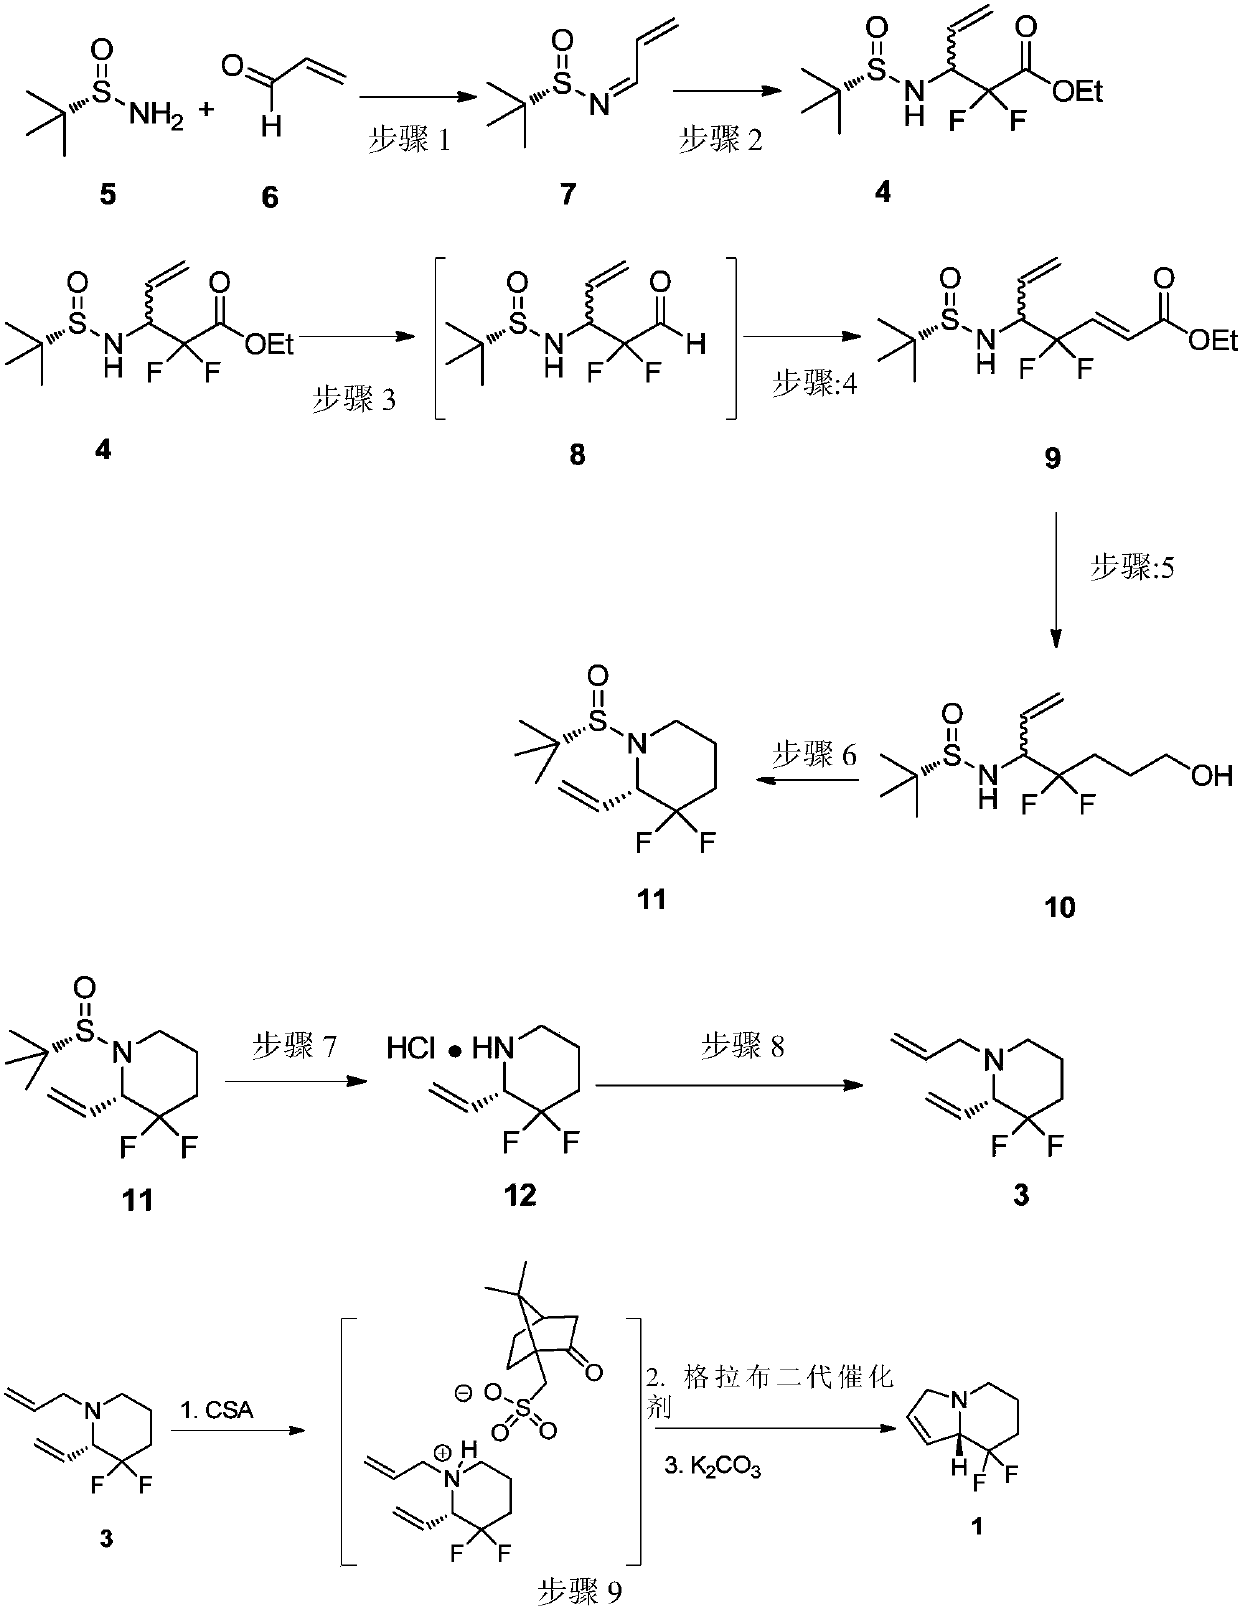 8,8-difluoro-swainsonine [(-)-swainsonine] derivative and preparation method thereof